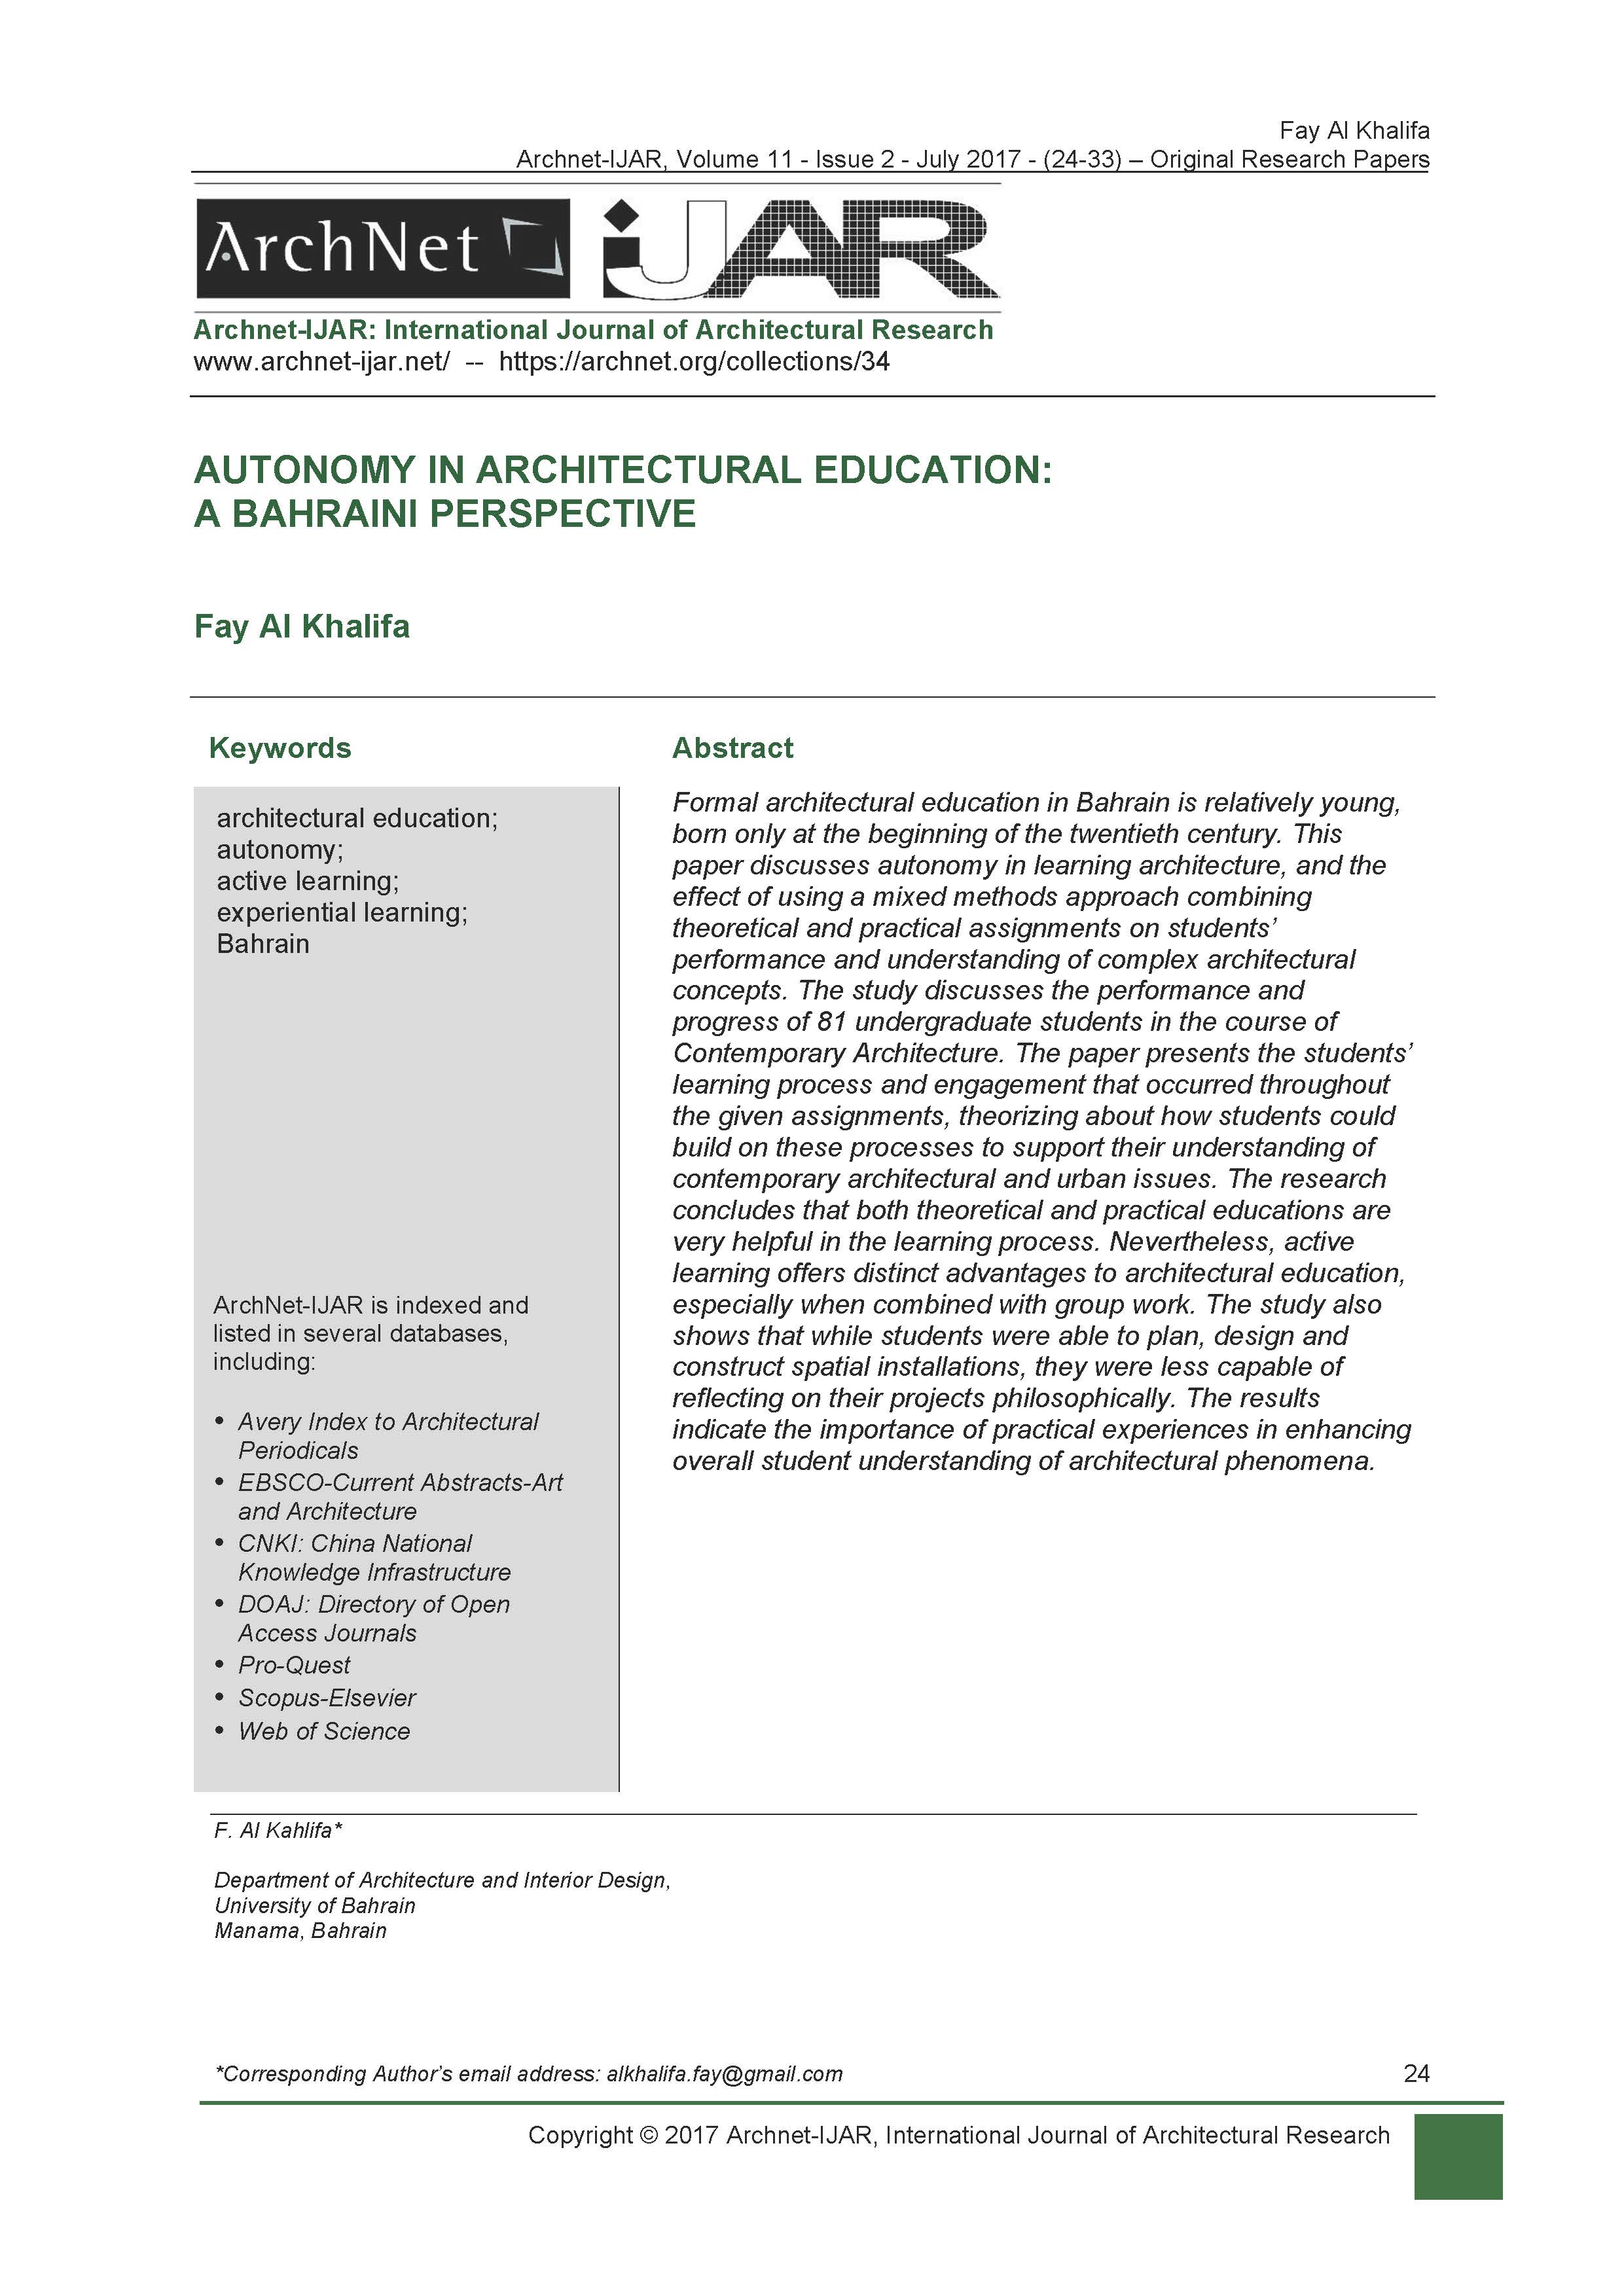 Autonomy in Architectural Education: A Bahraini Perspective